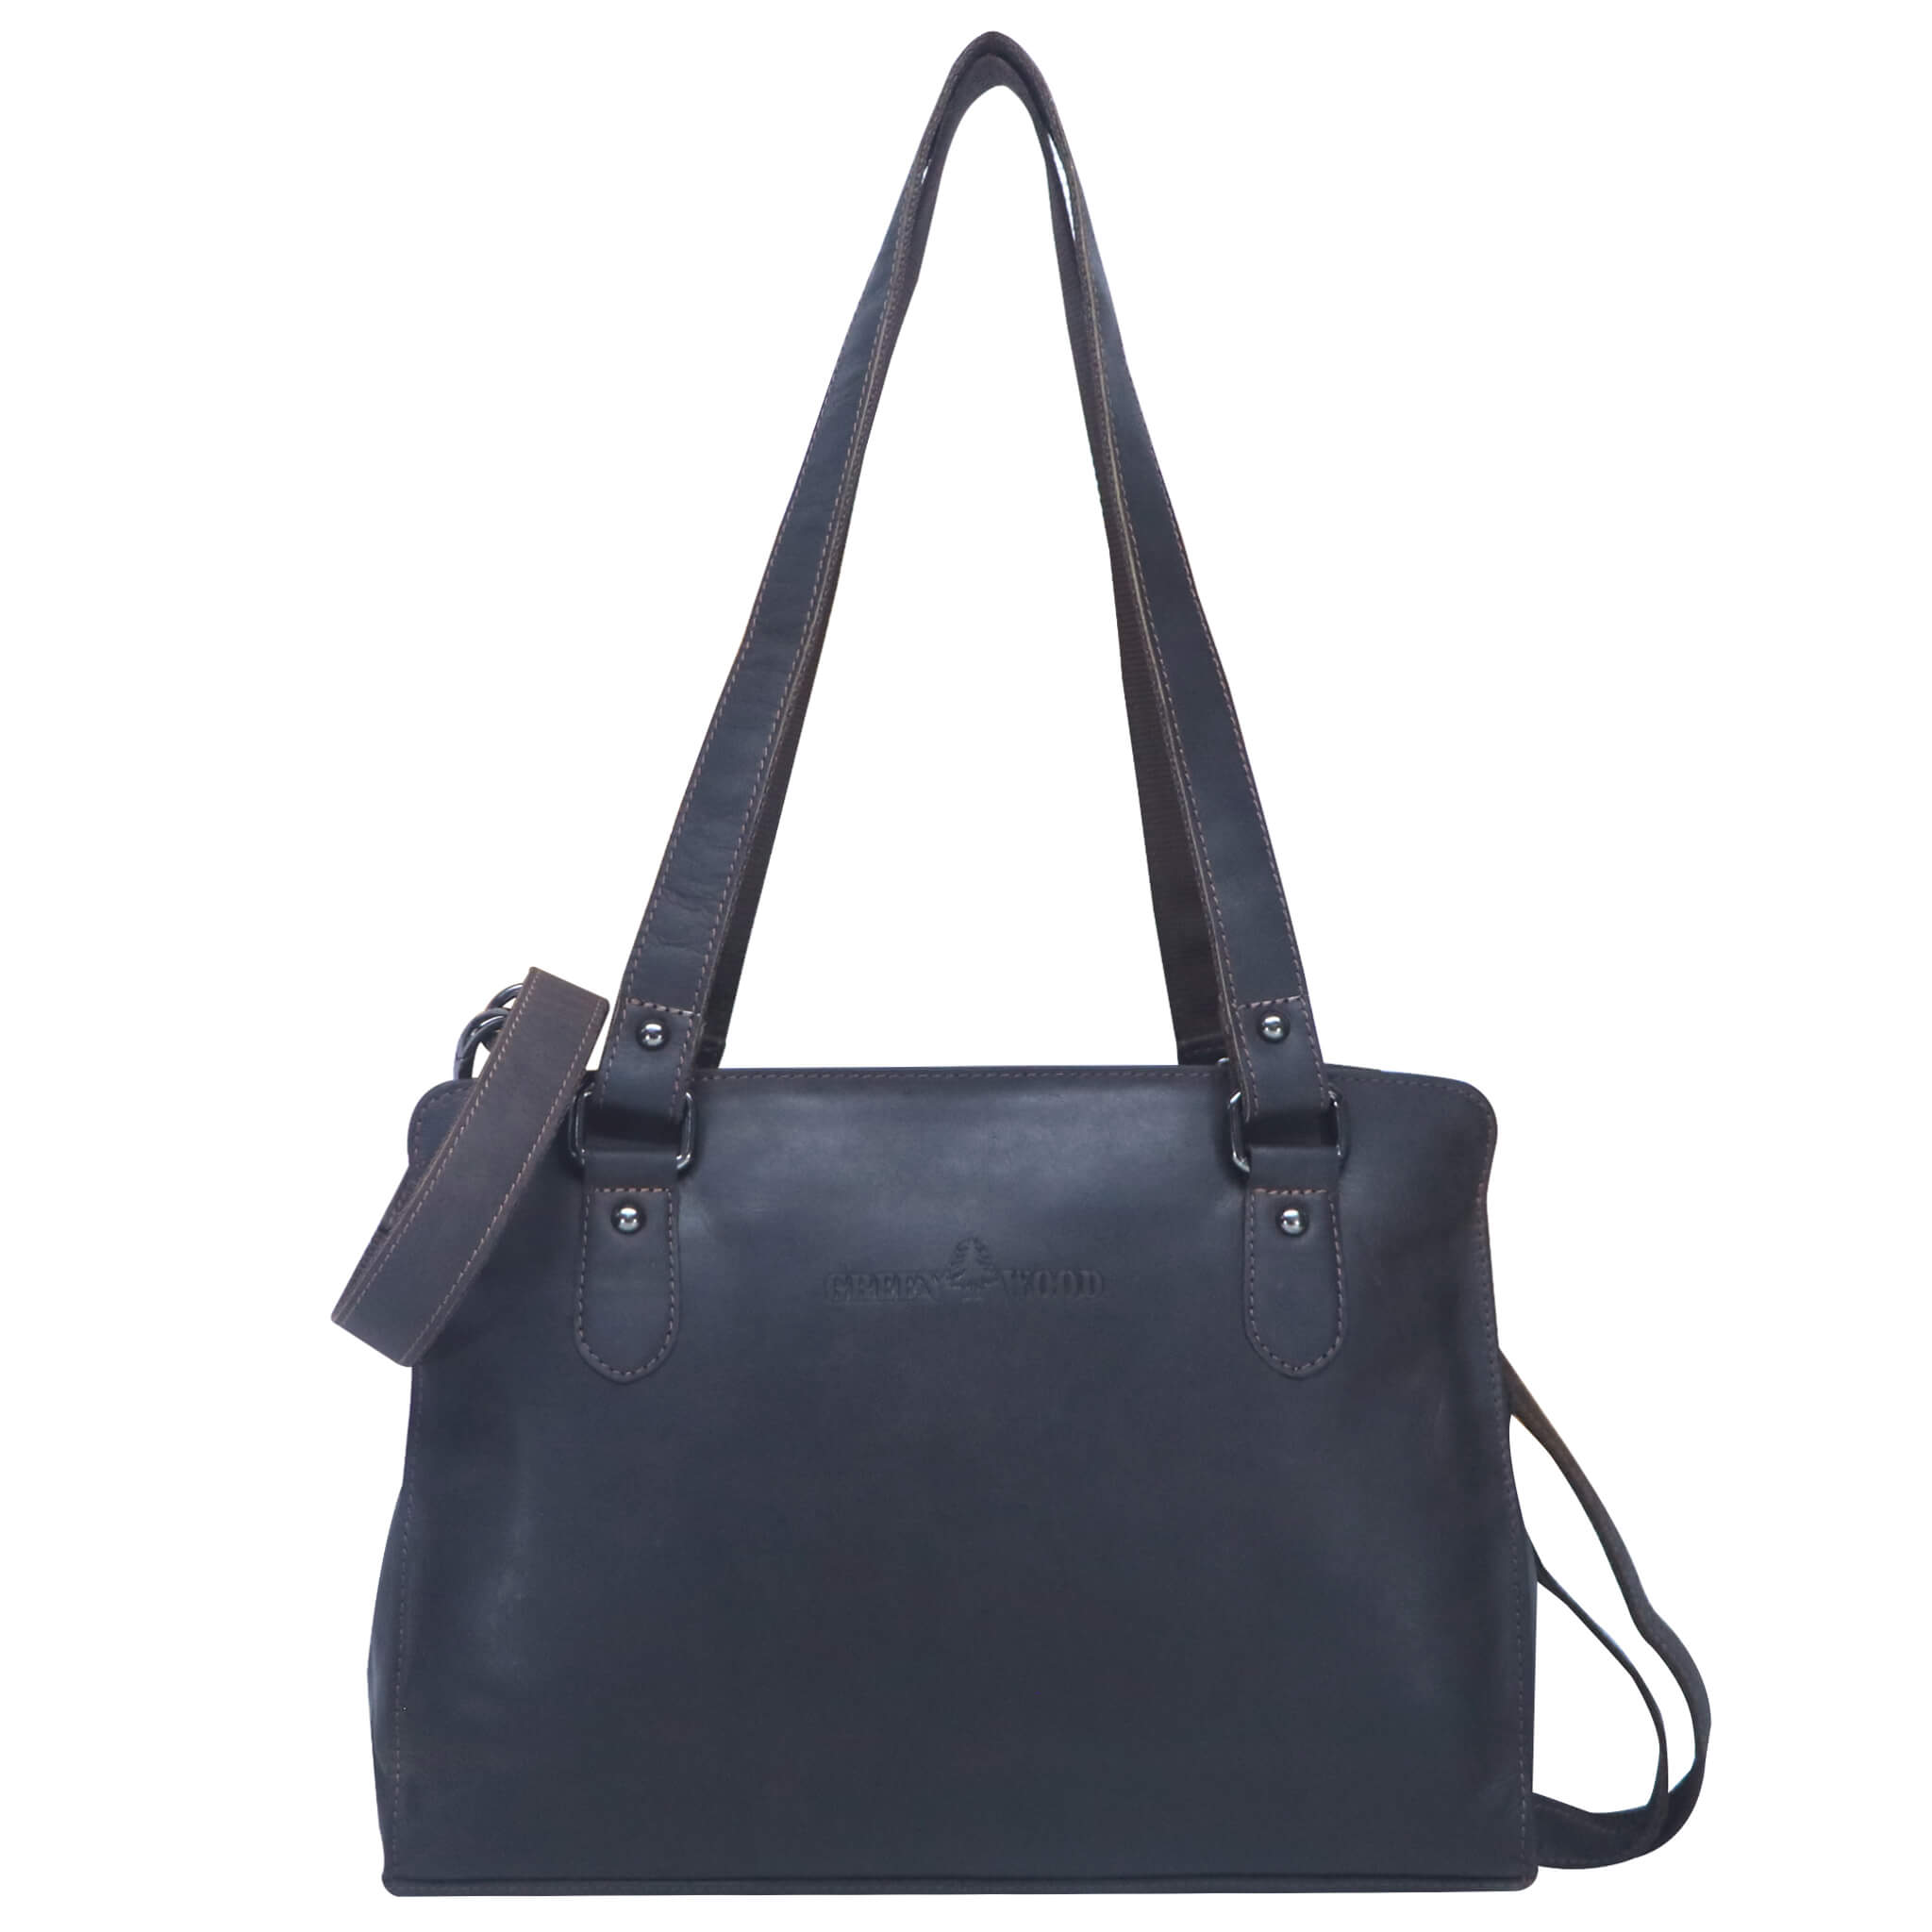 Madi Small Handbag Women Leather Top Handle Bag Shopper